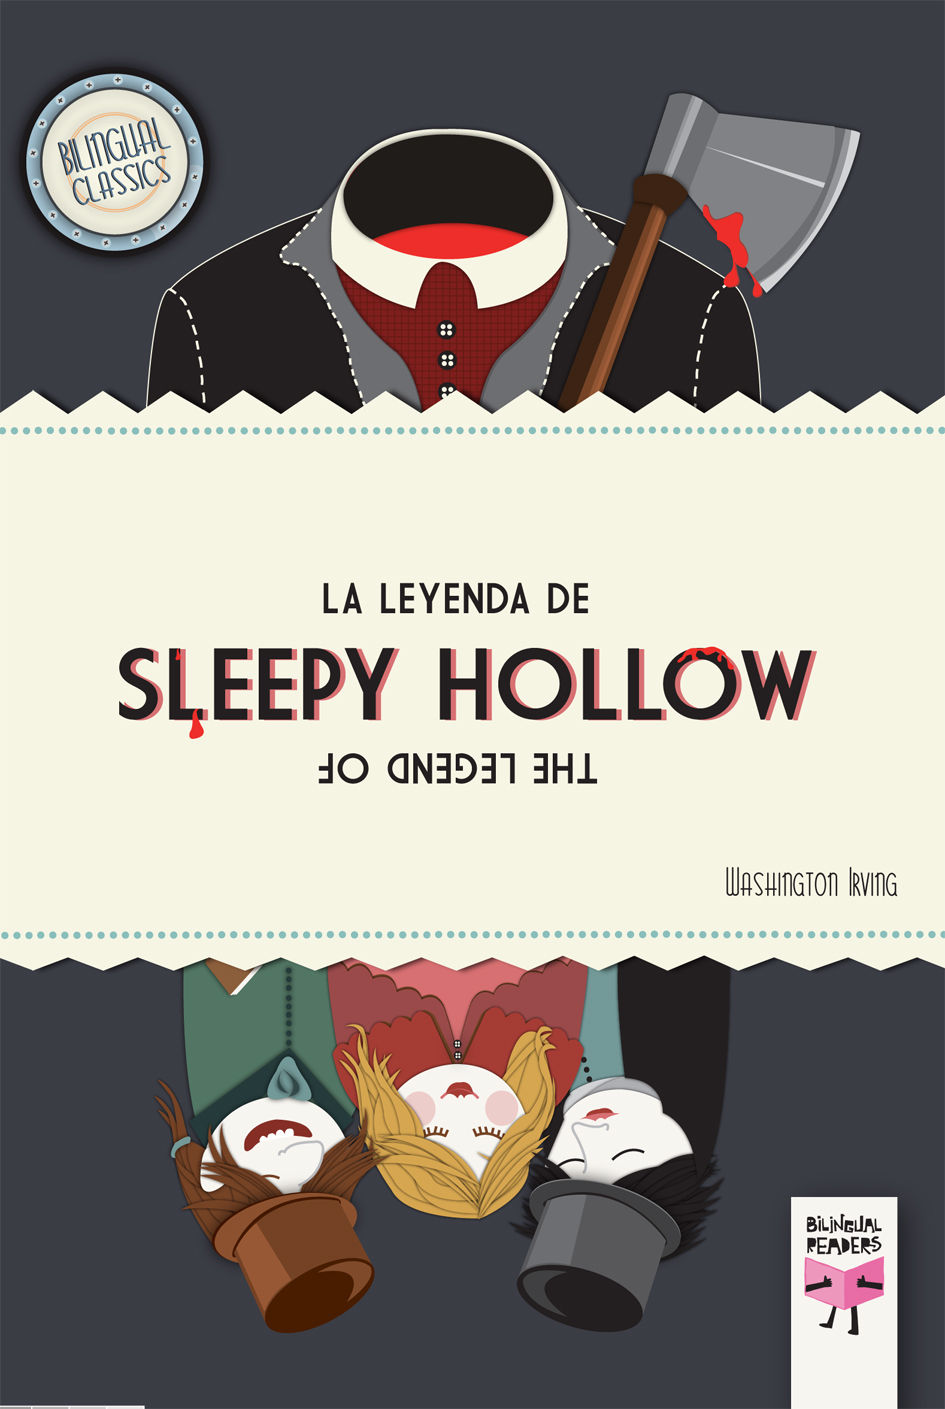 LA LEYENDA DE SLEEPY HOLLOW / THE LEGEND OF SLEEPY HOLLOW